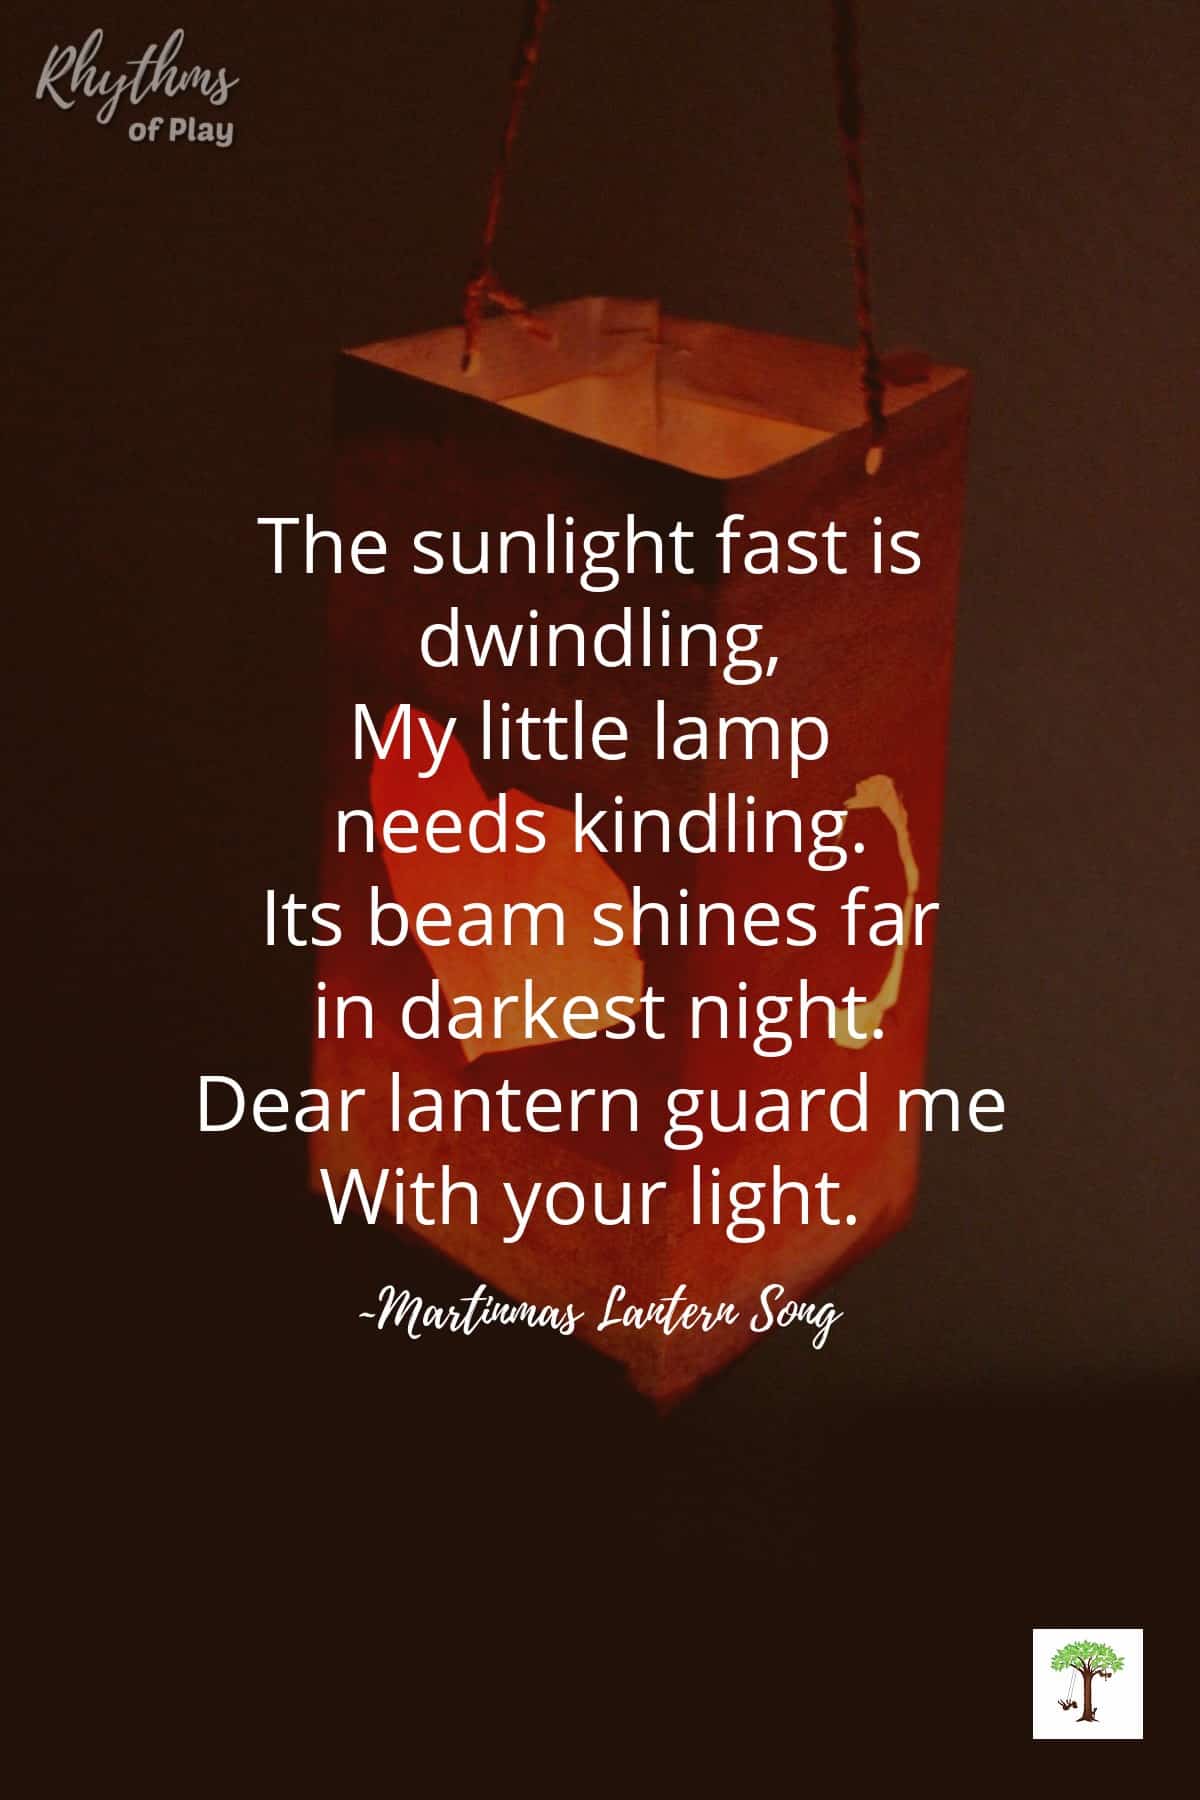 Martinmas Lantern Song for Lantern Walk, "The sunlight fast is dwindling,
my little lamp needs kindling. Its beam shines far in darkest night. Dear lantern guard me with your light."